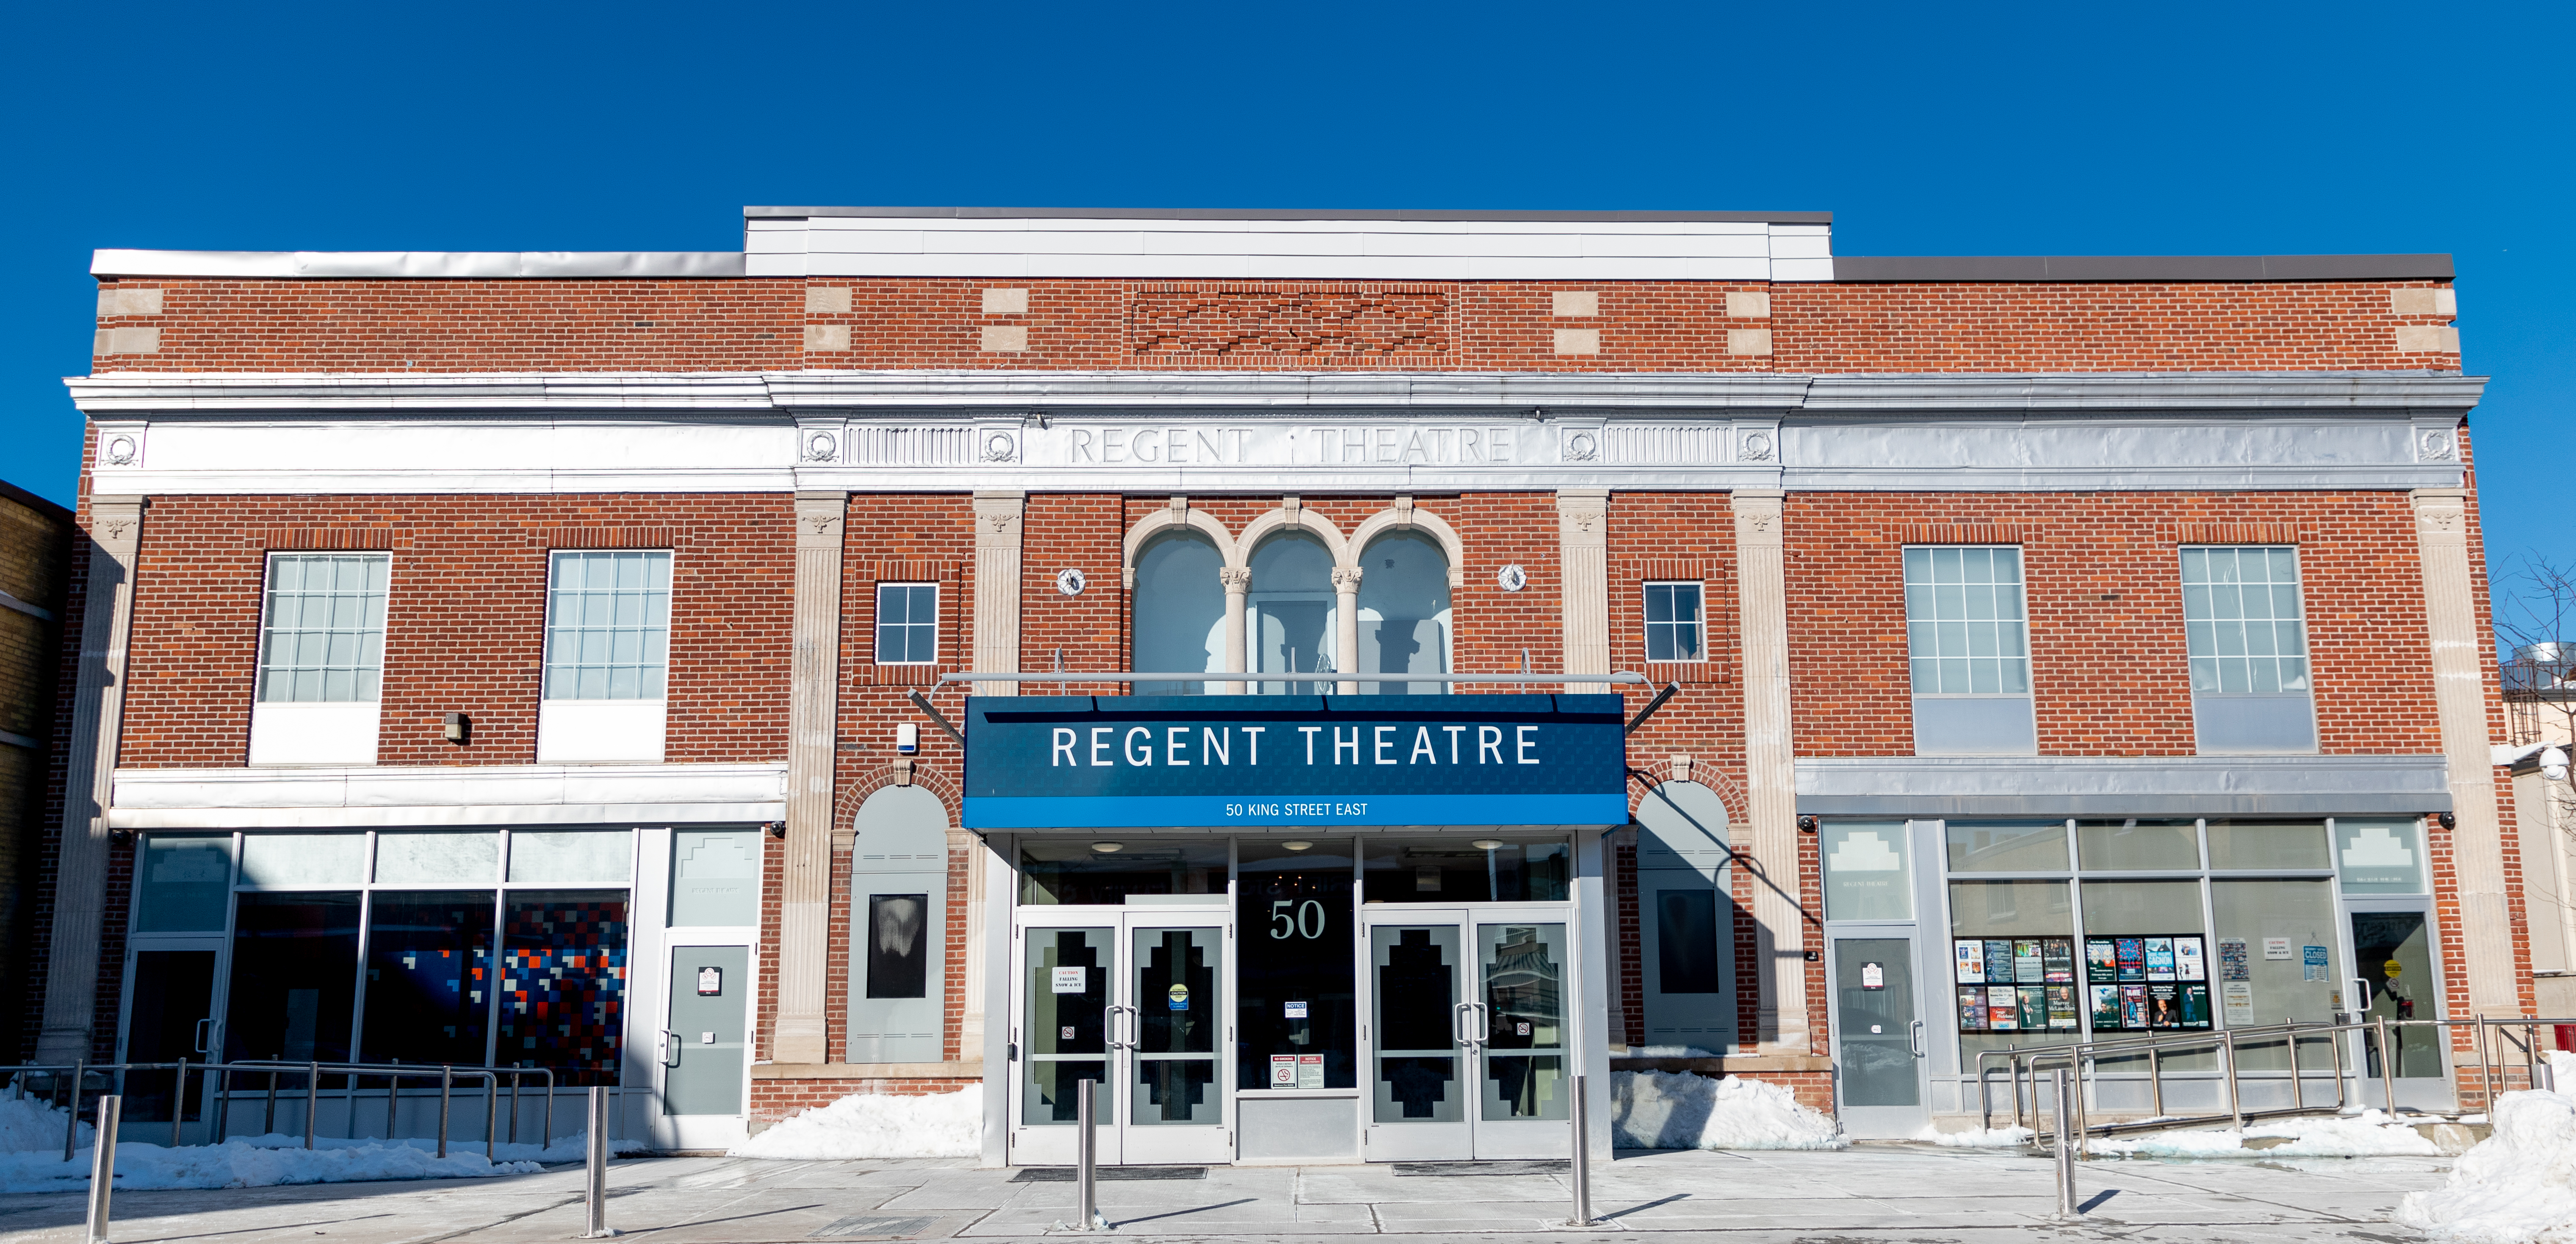 Regent Theatre, 50 King Street East